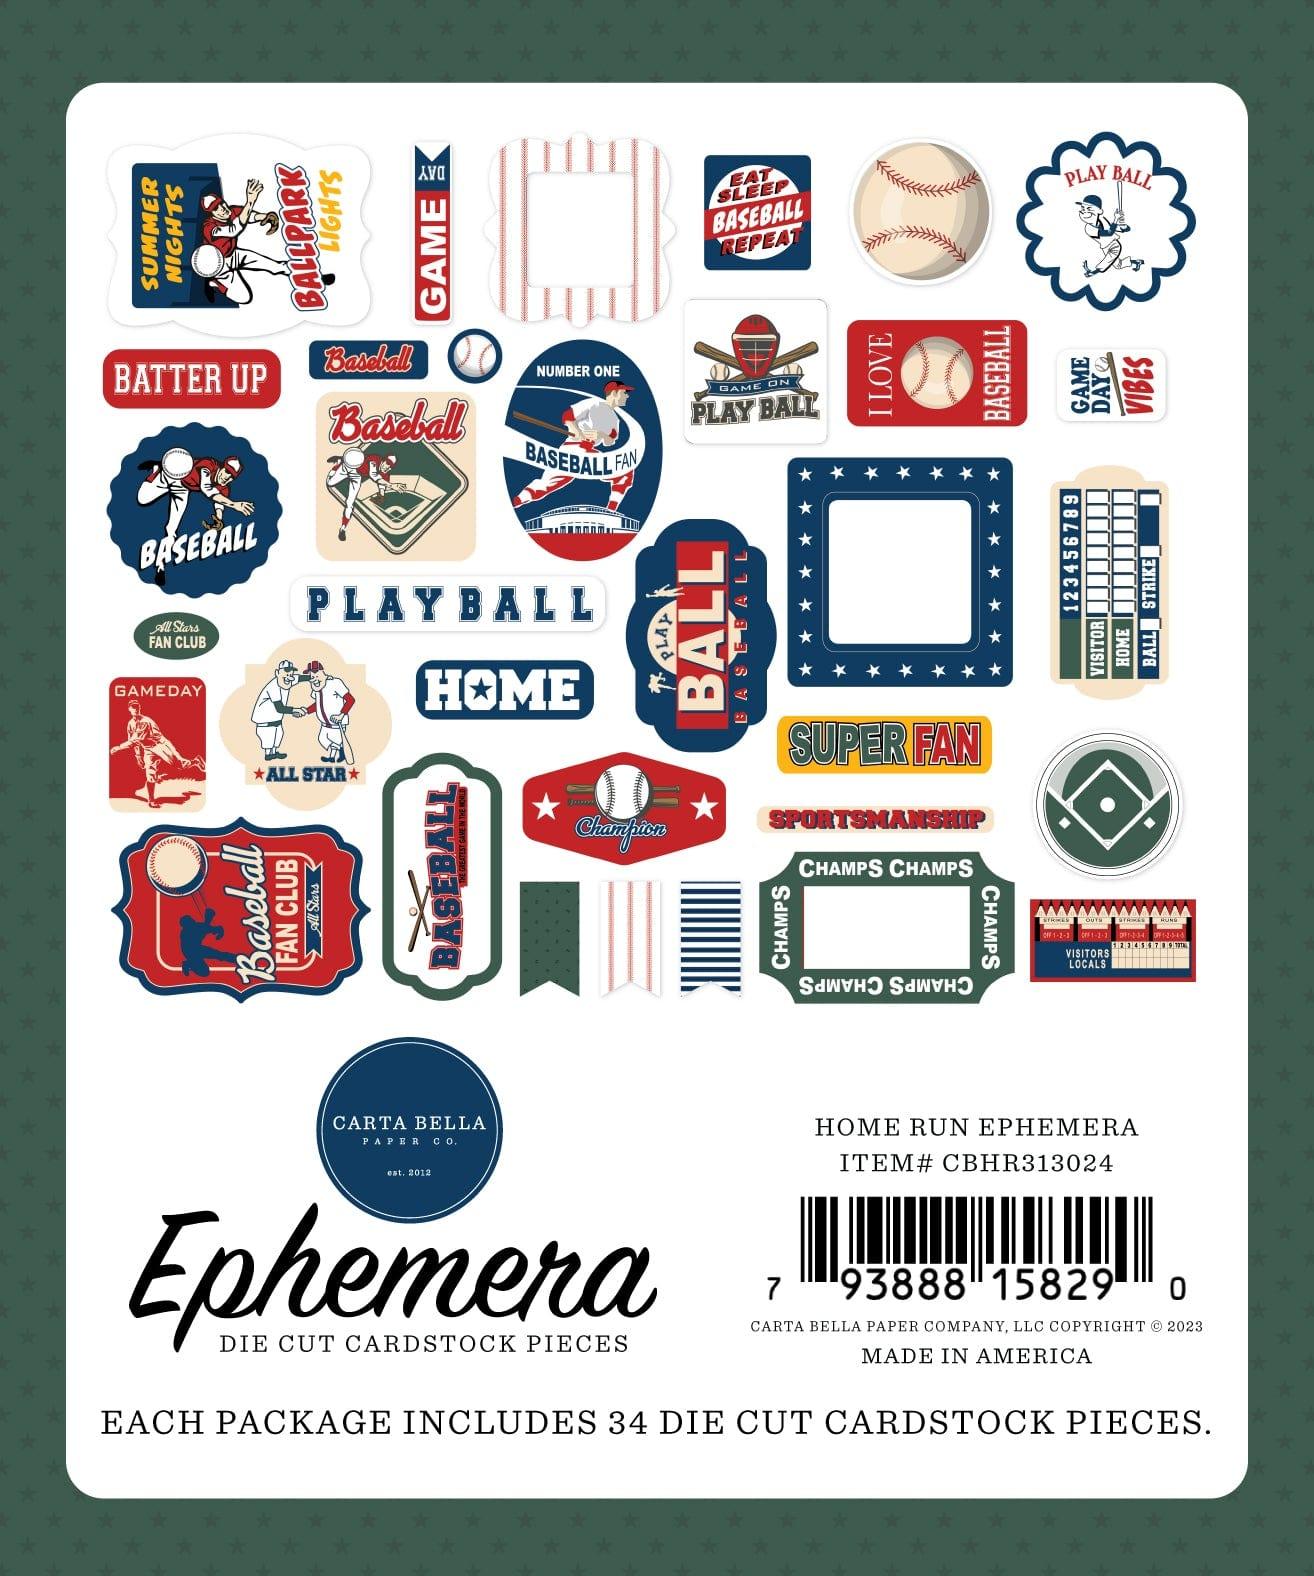 Home Run Collection 5 x 5 Scrapbook Ephemera Die Cuts by Carta Bella - Scrapbook Supply Companies